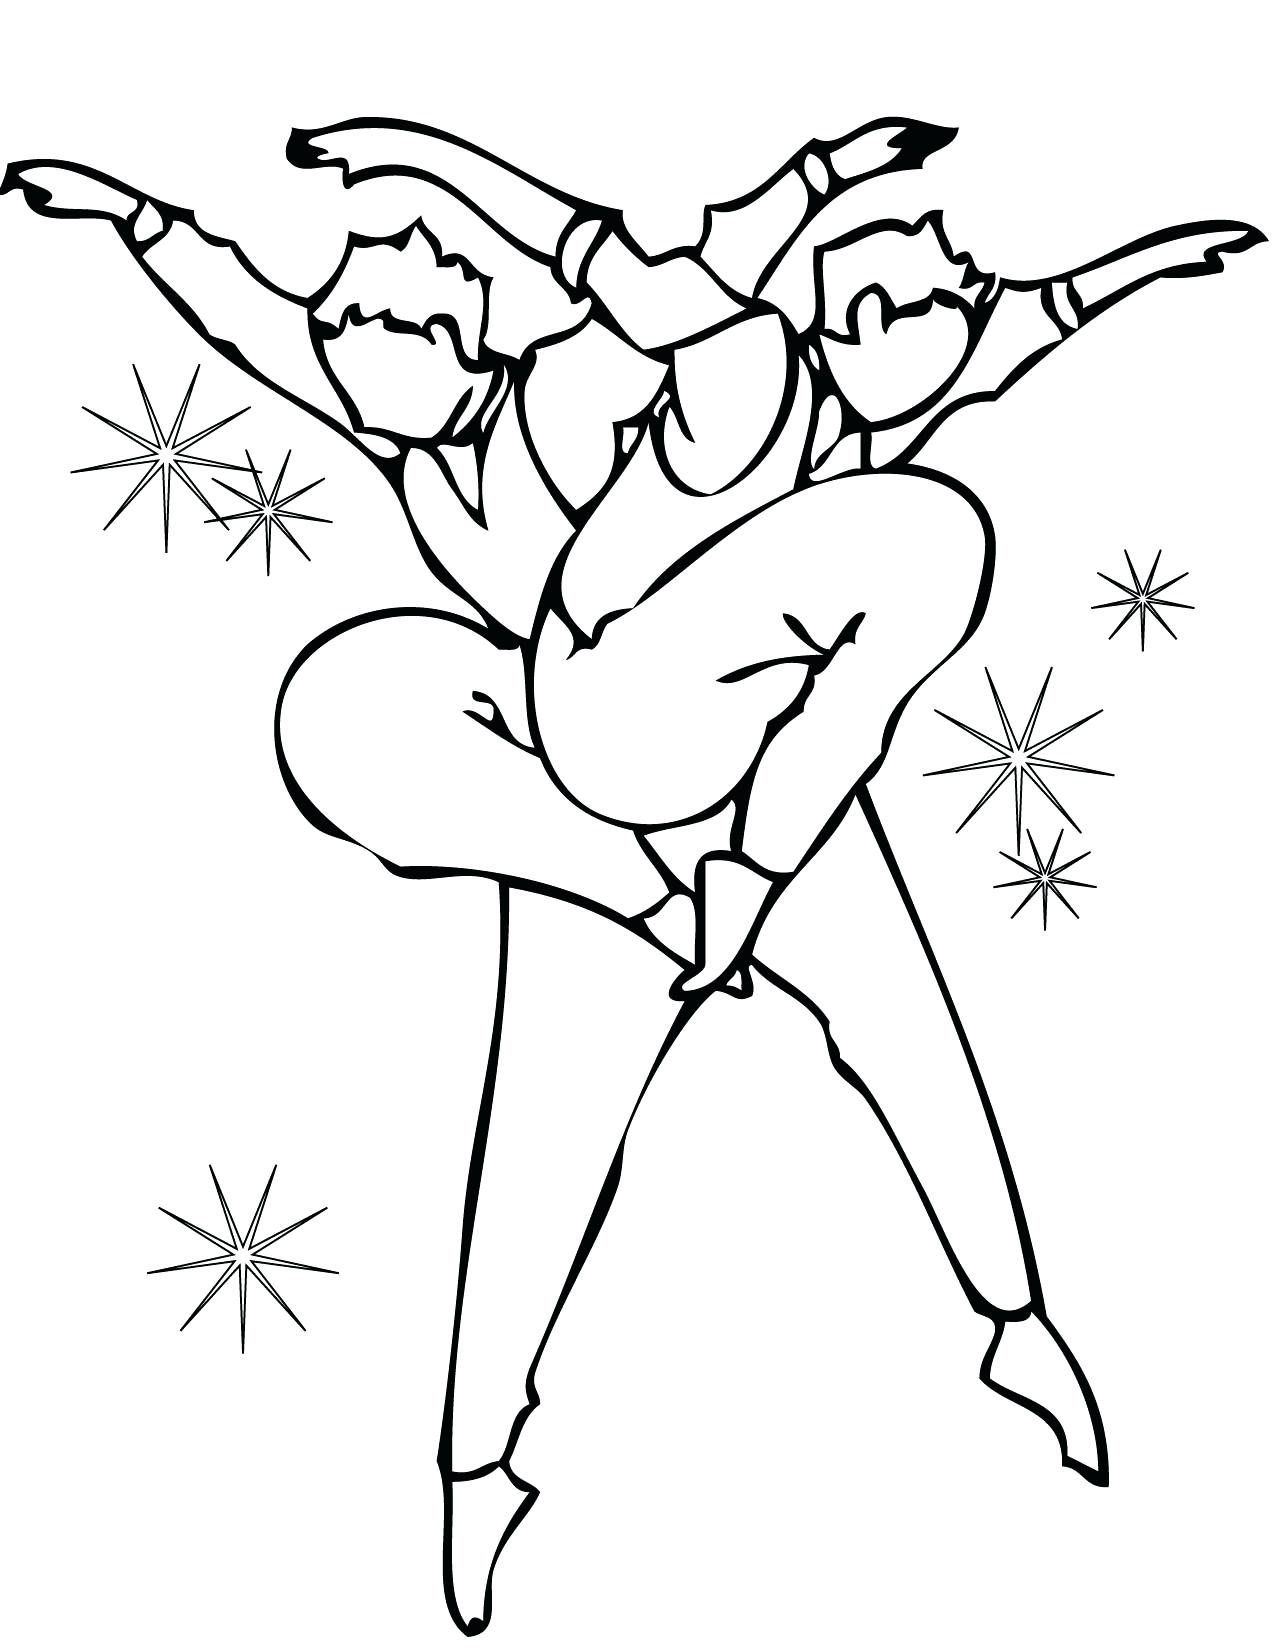 Ballroom Dancing Coloring Pages at GetColorings.com | Free printable